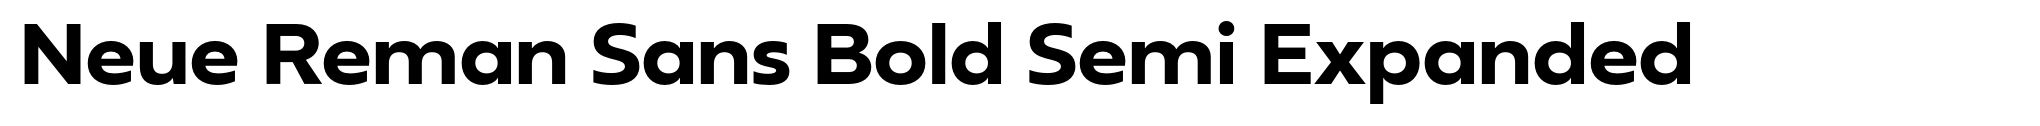 Neue Reman Sans Bold Semi Expanded image